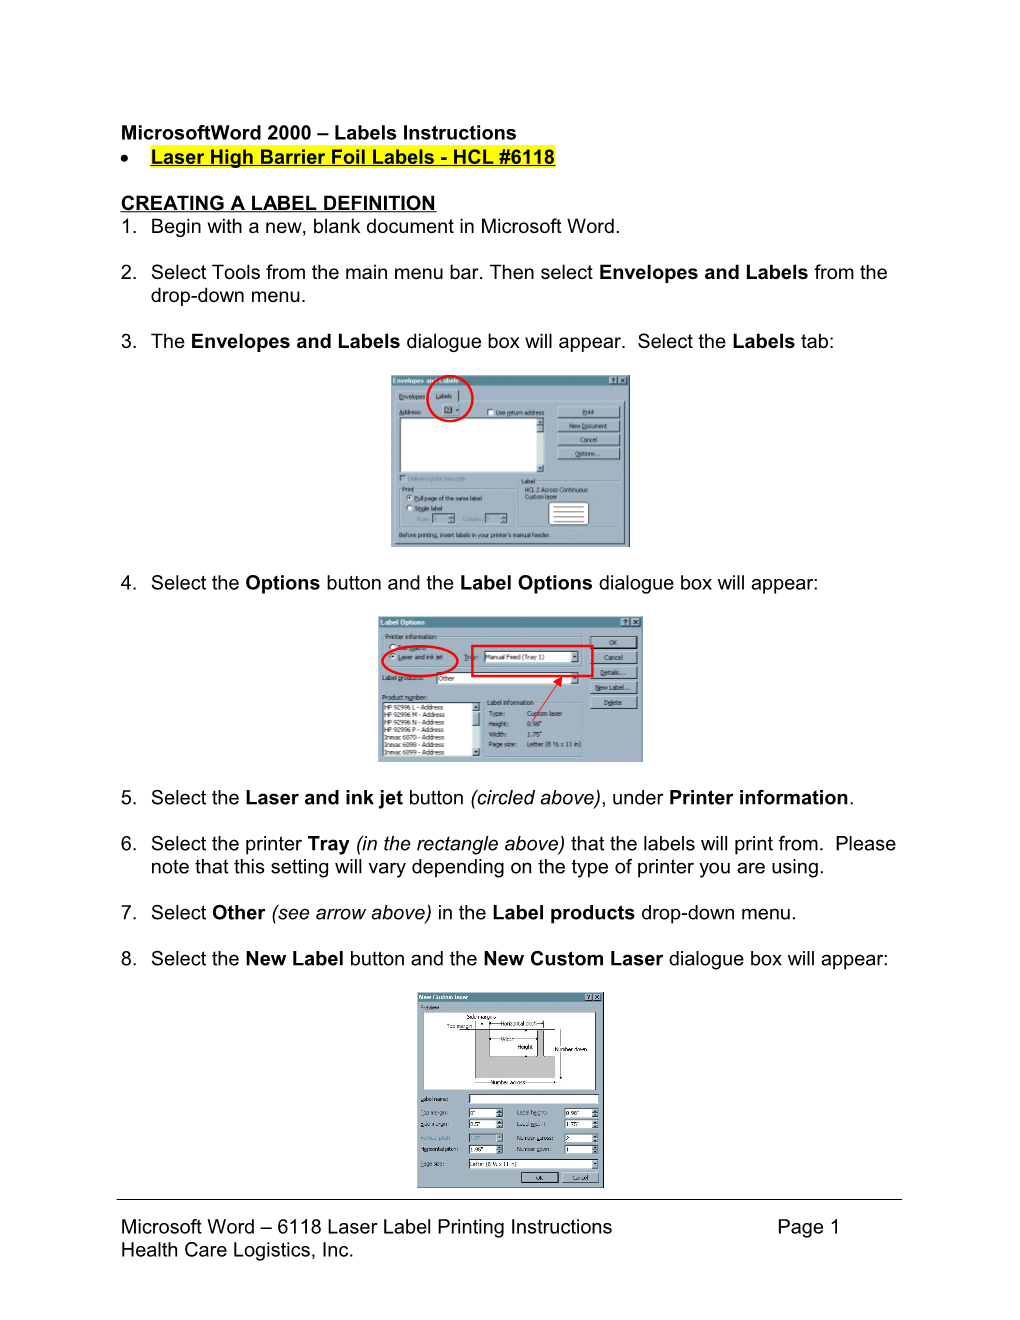 Microsoft Word 2000 Label Printing Instructions